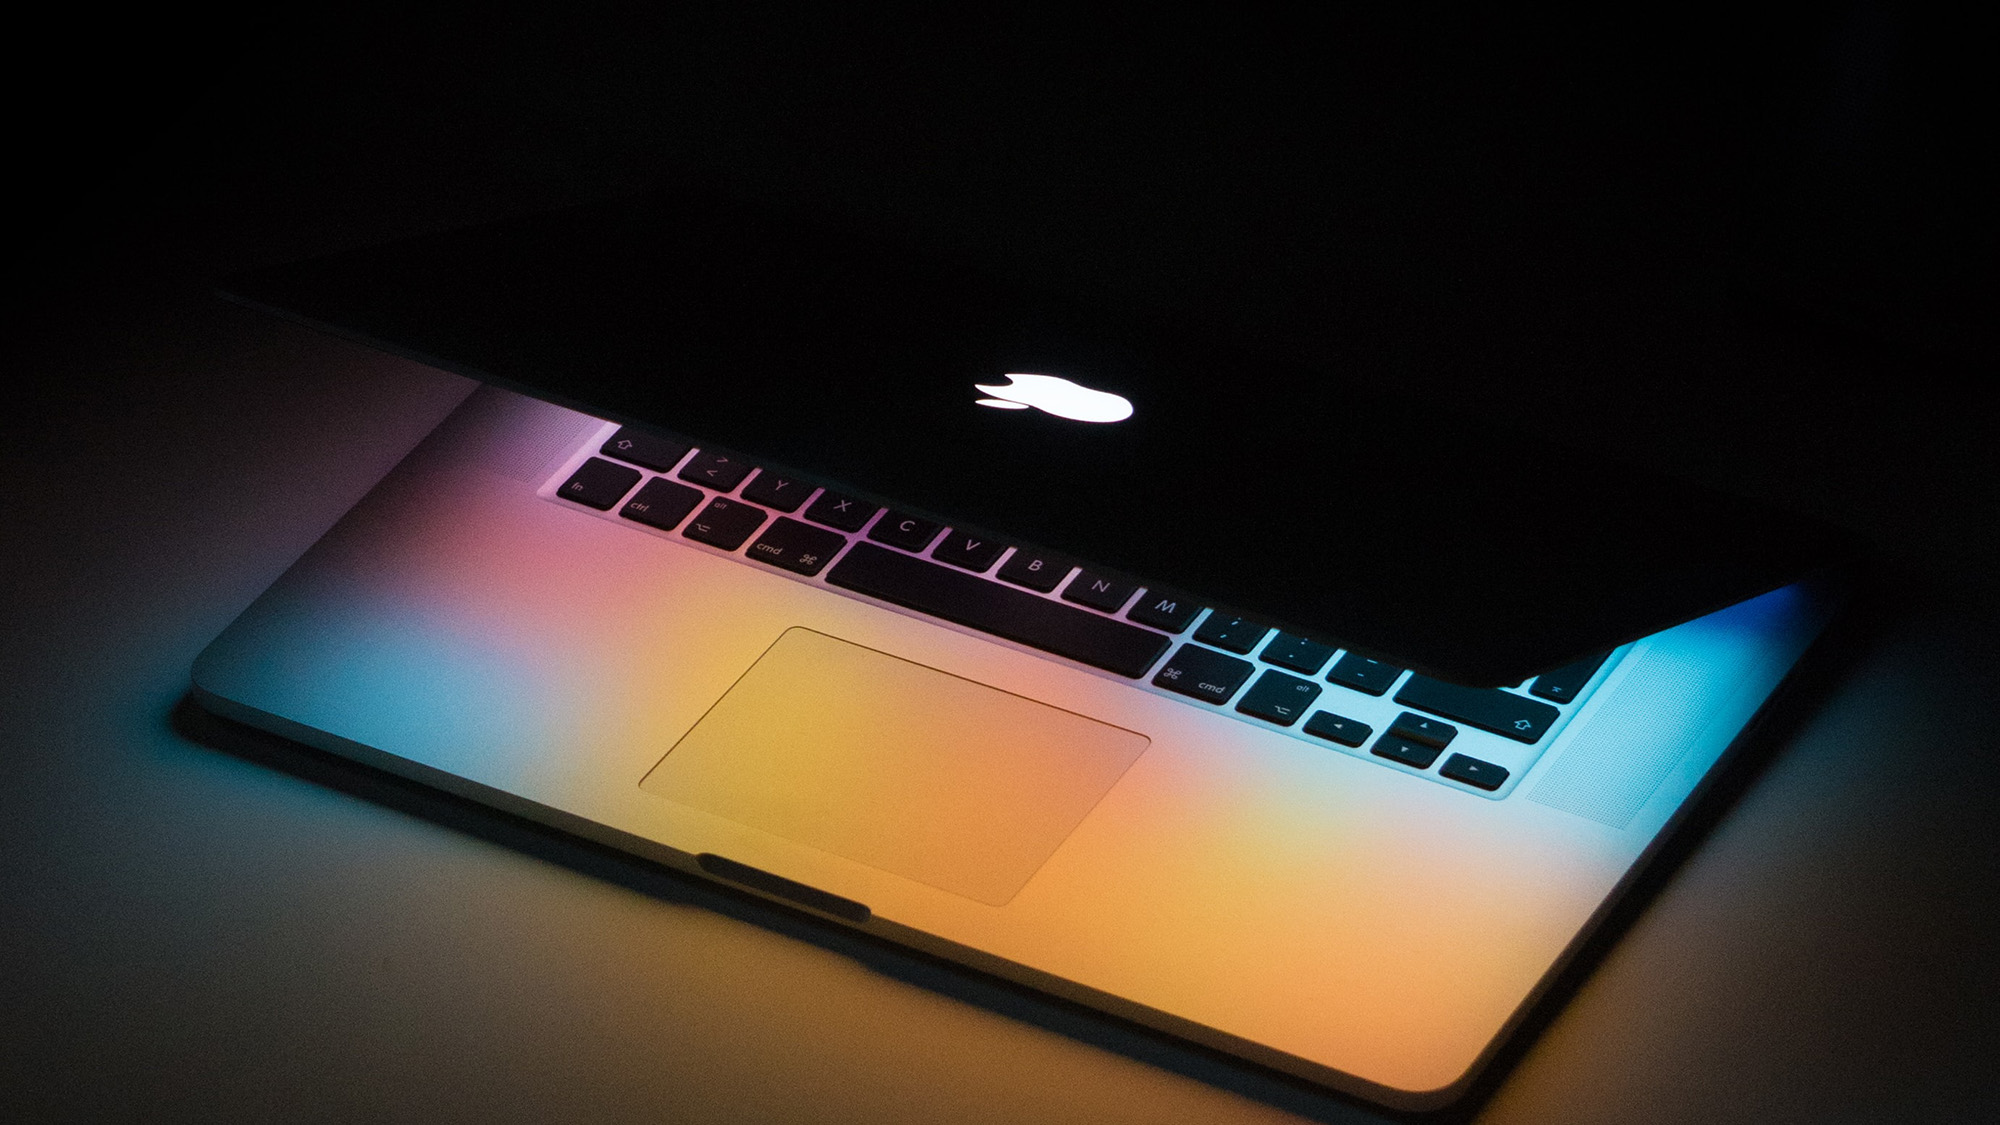 slightly-closed-mac-laptop-on-a-desk-in-a-dark-room